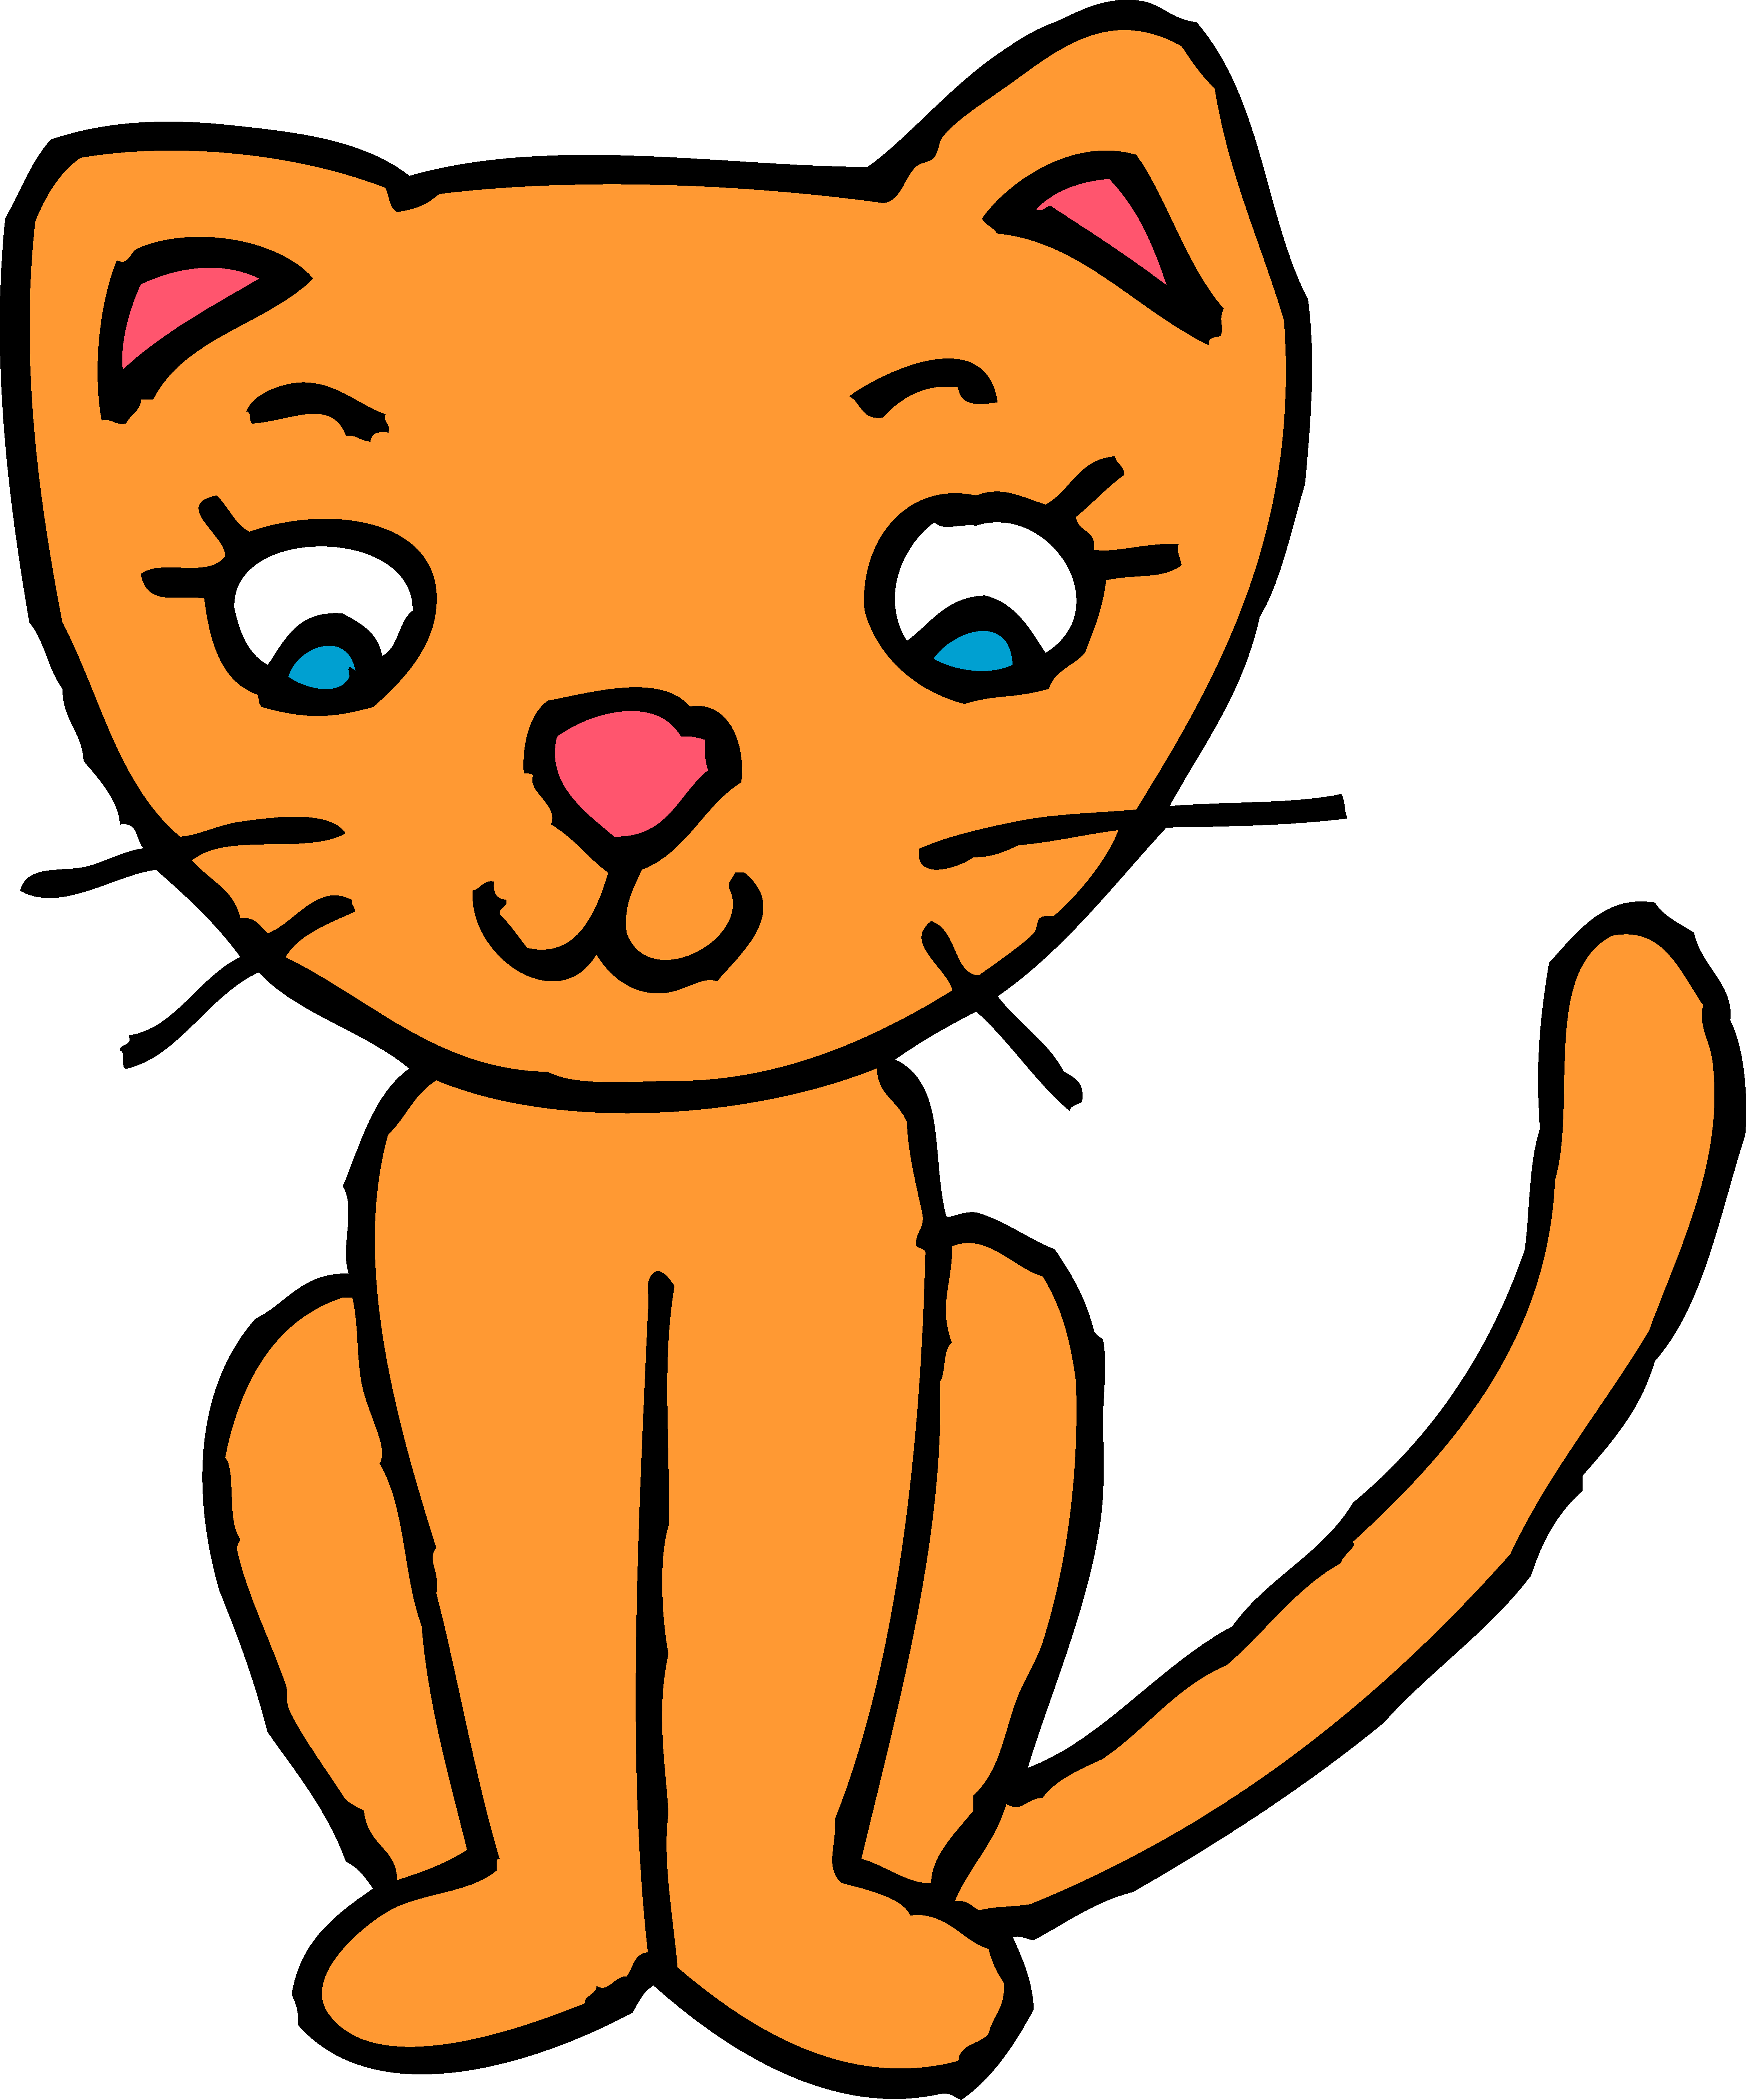 Cute cat clip art - ClipartFox